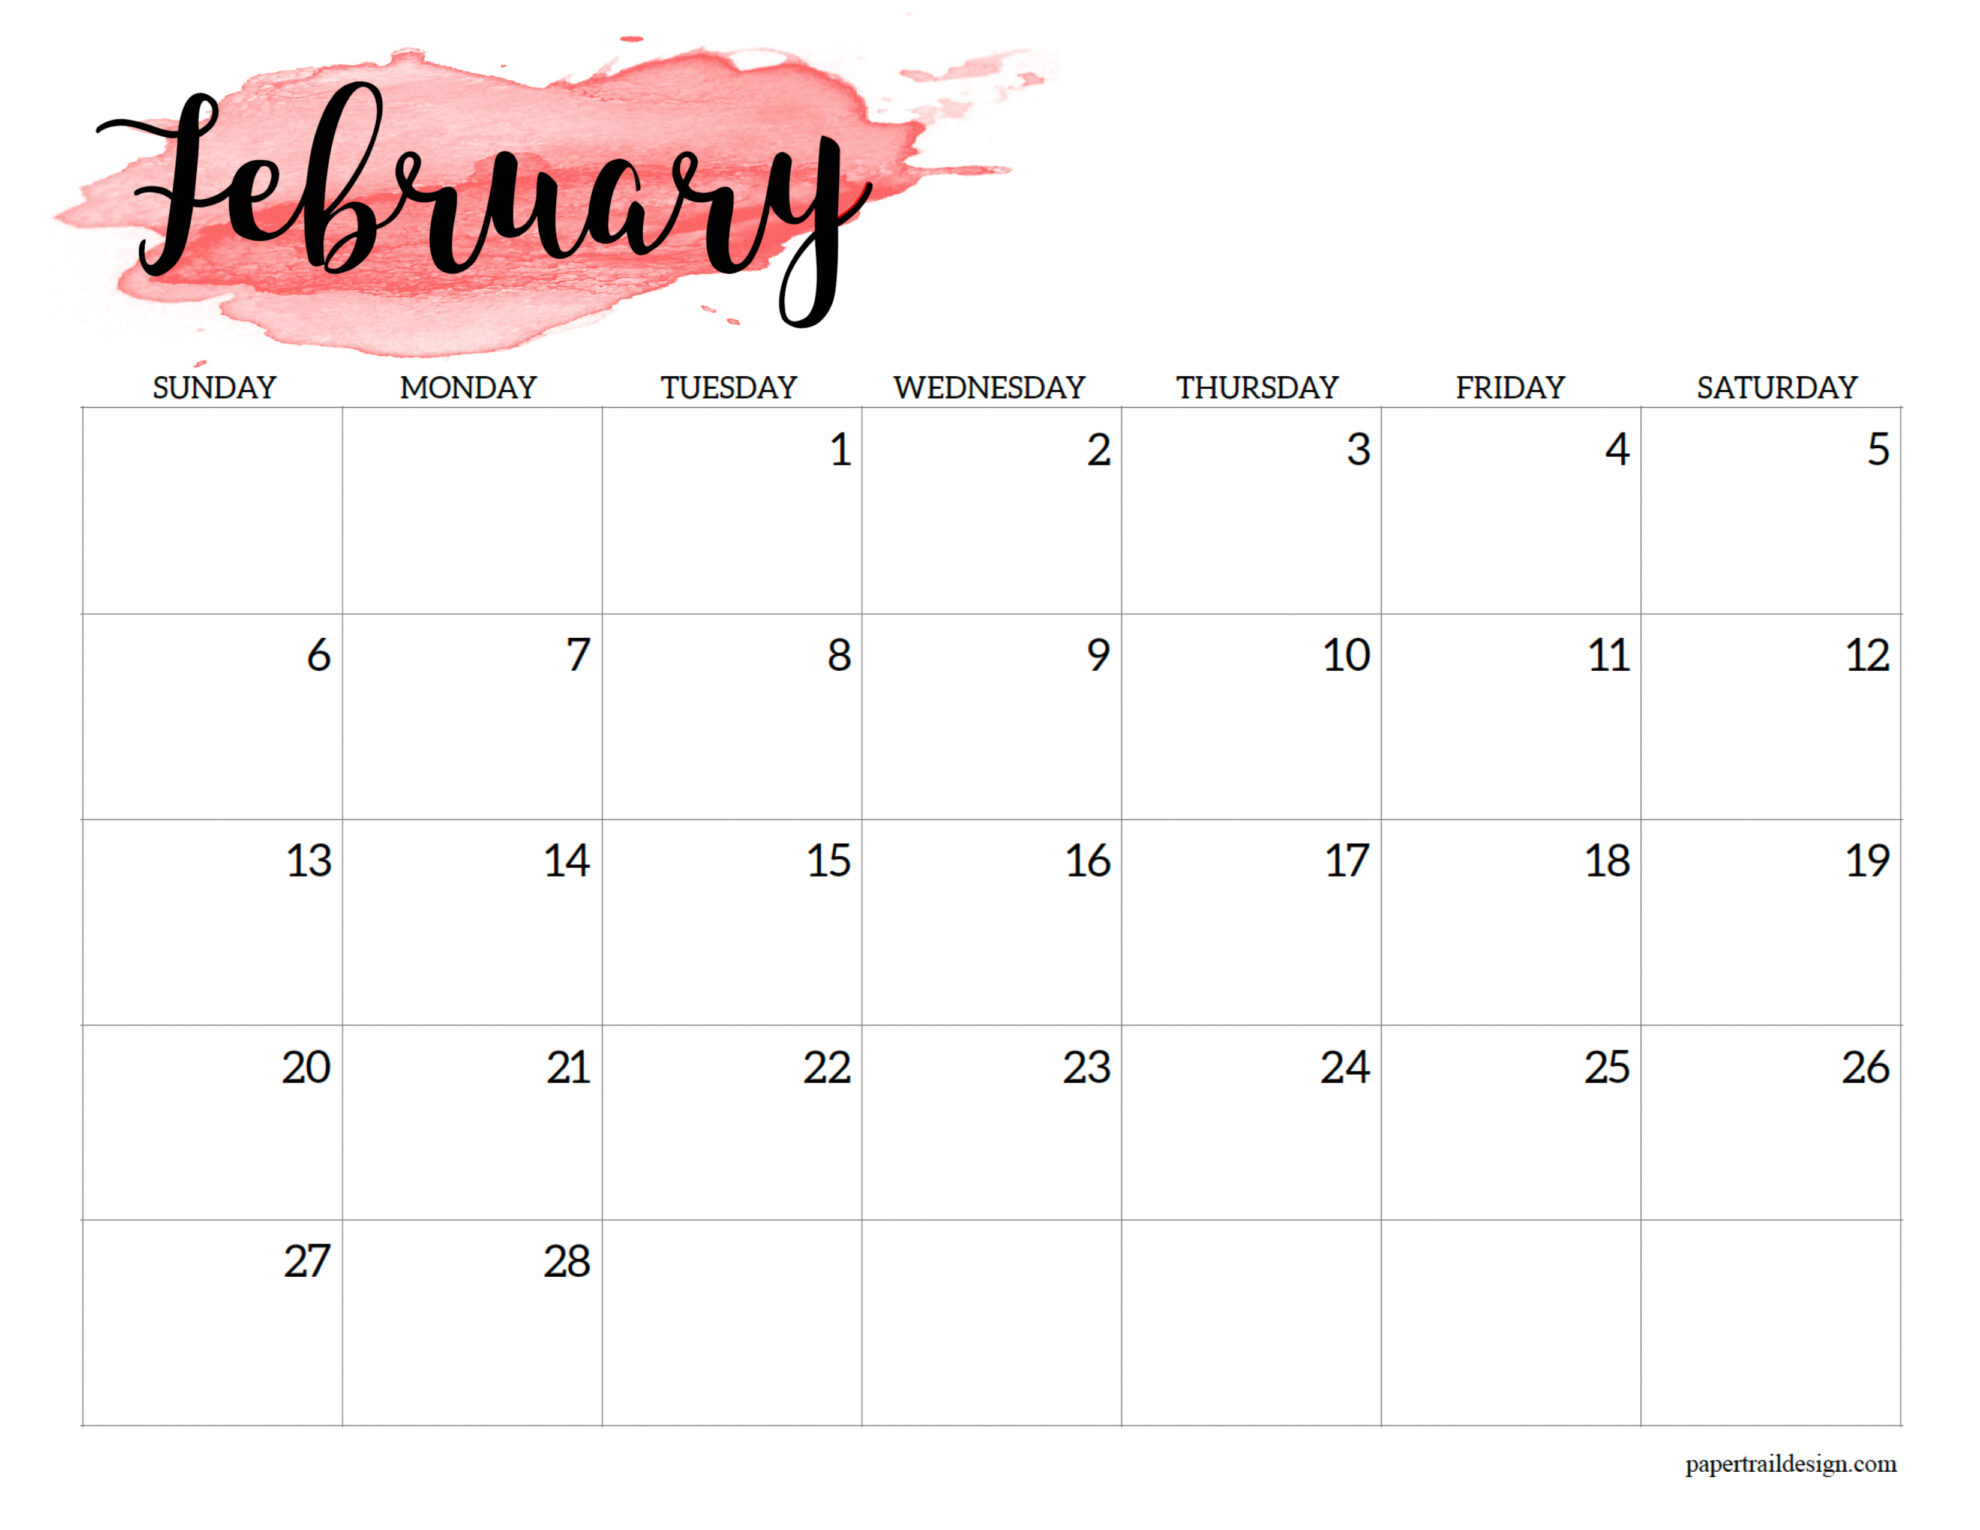 February 2022 Calendar Page 2022 Calendar Printable - Watercolor - Paper Trail Design